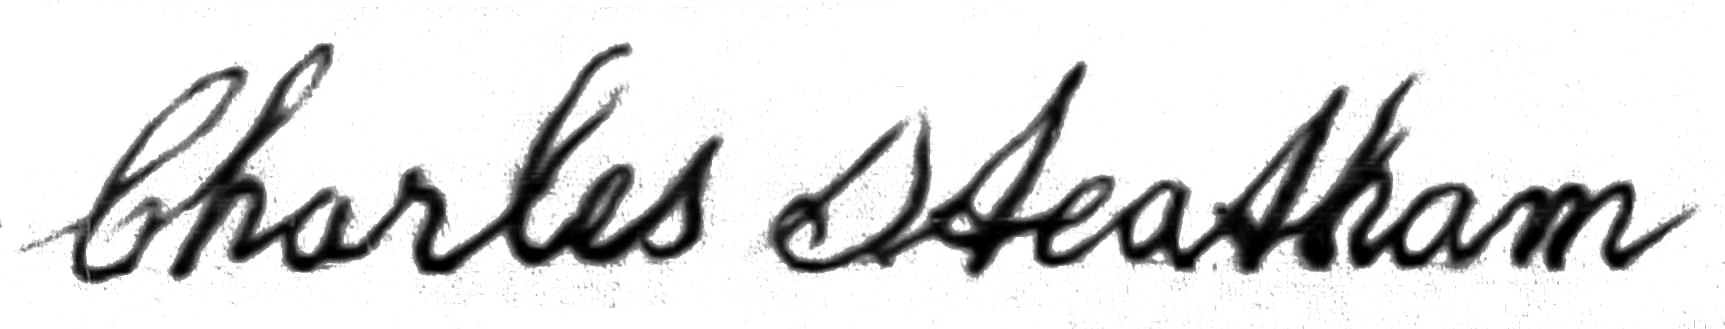 Photo of Charles Steatham's signature